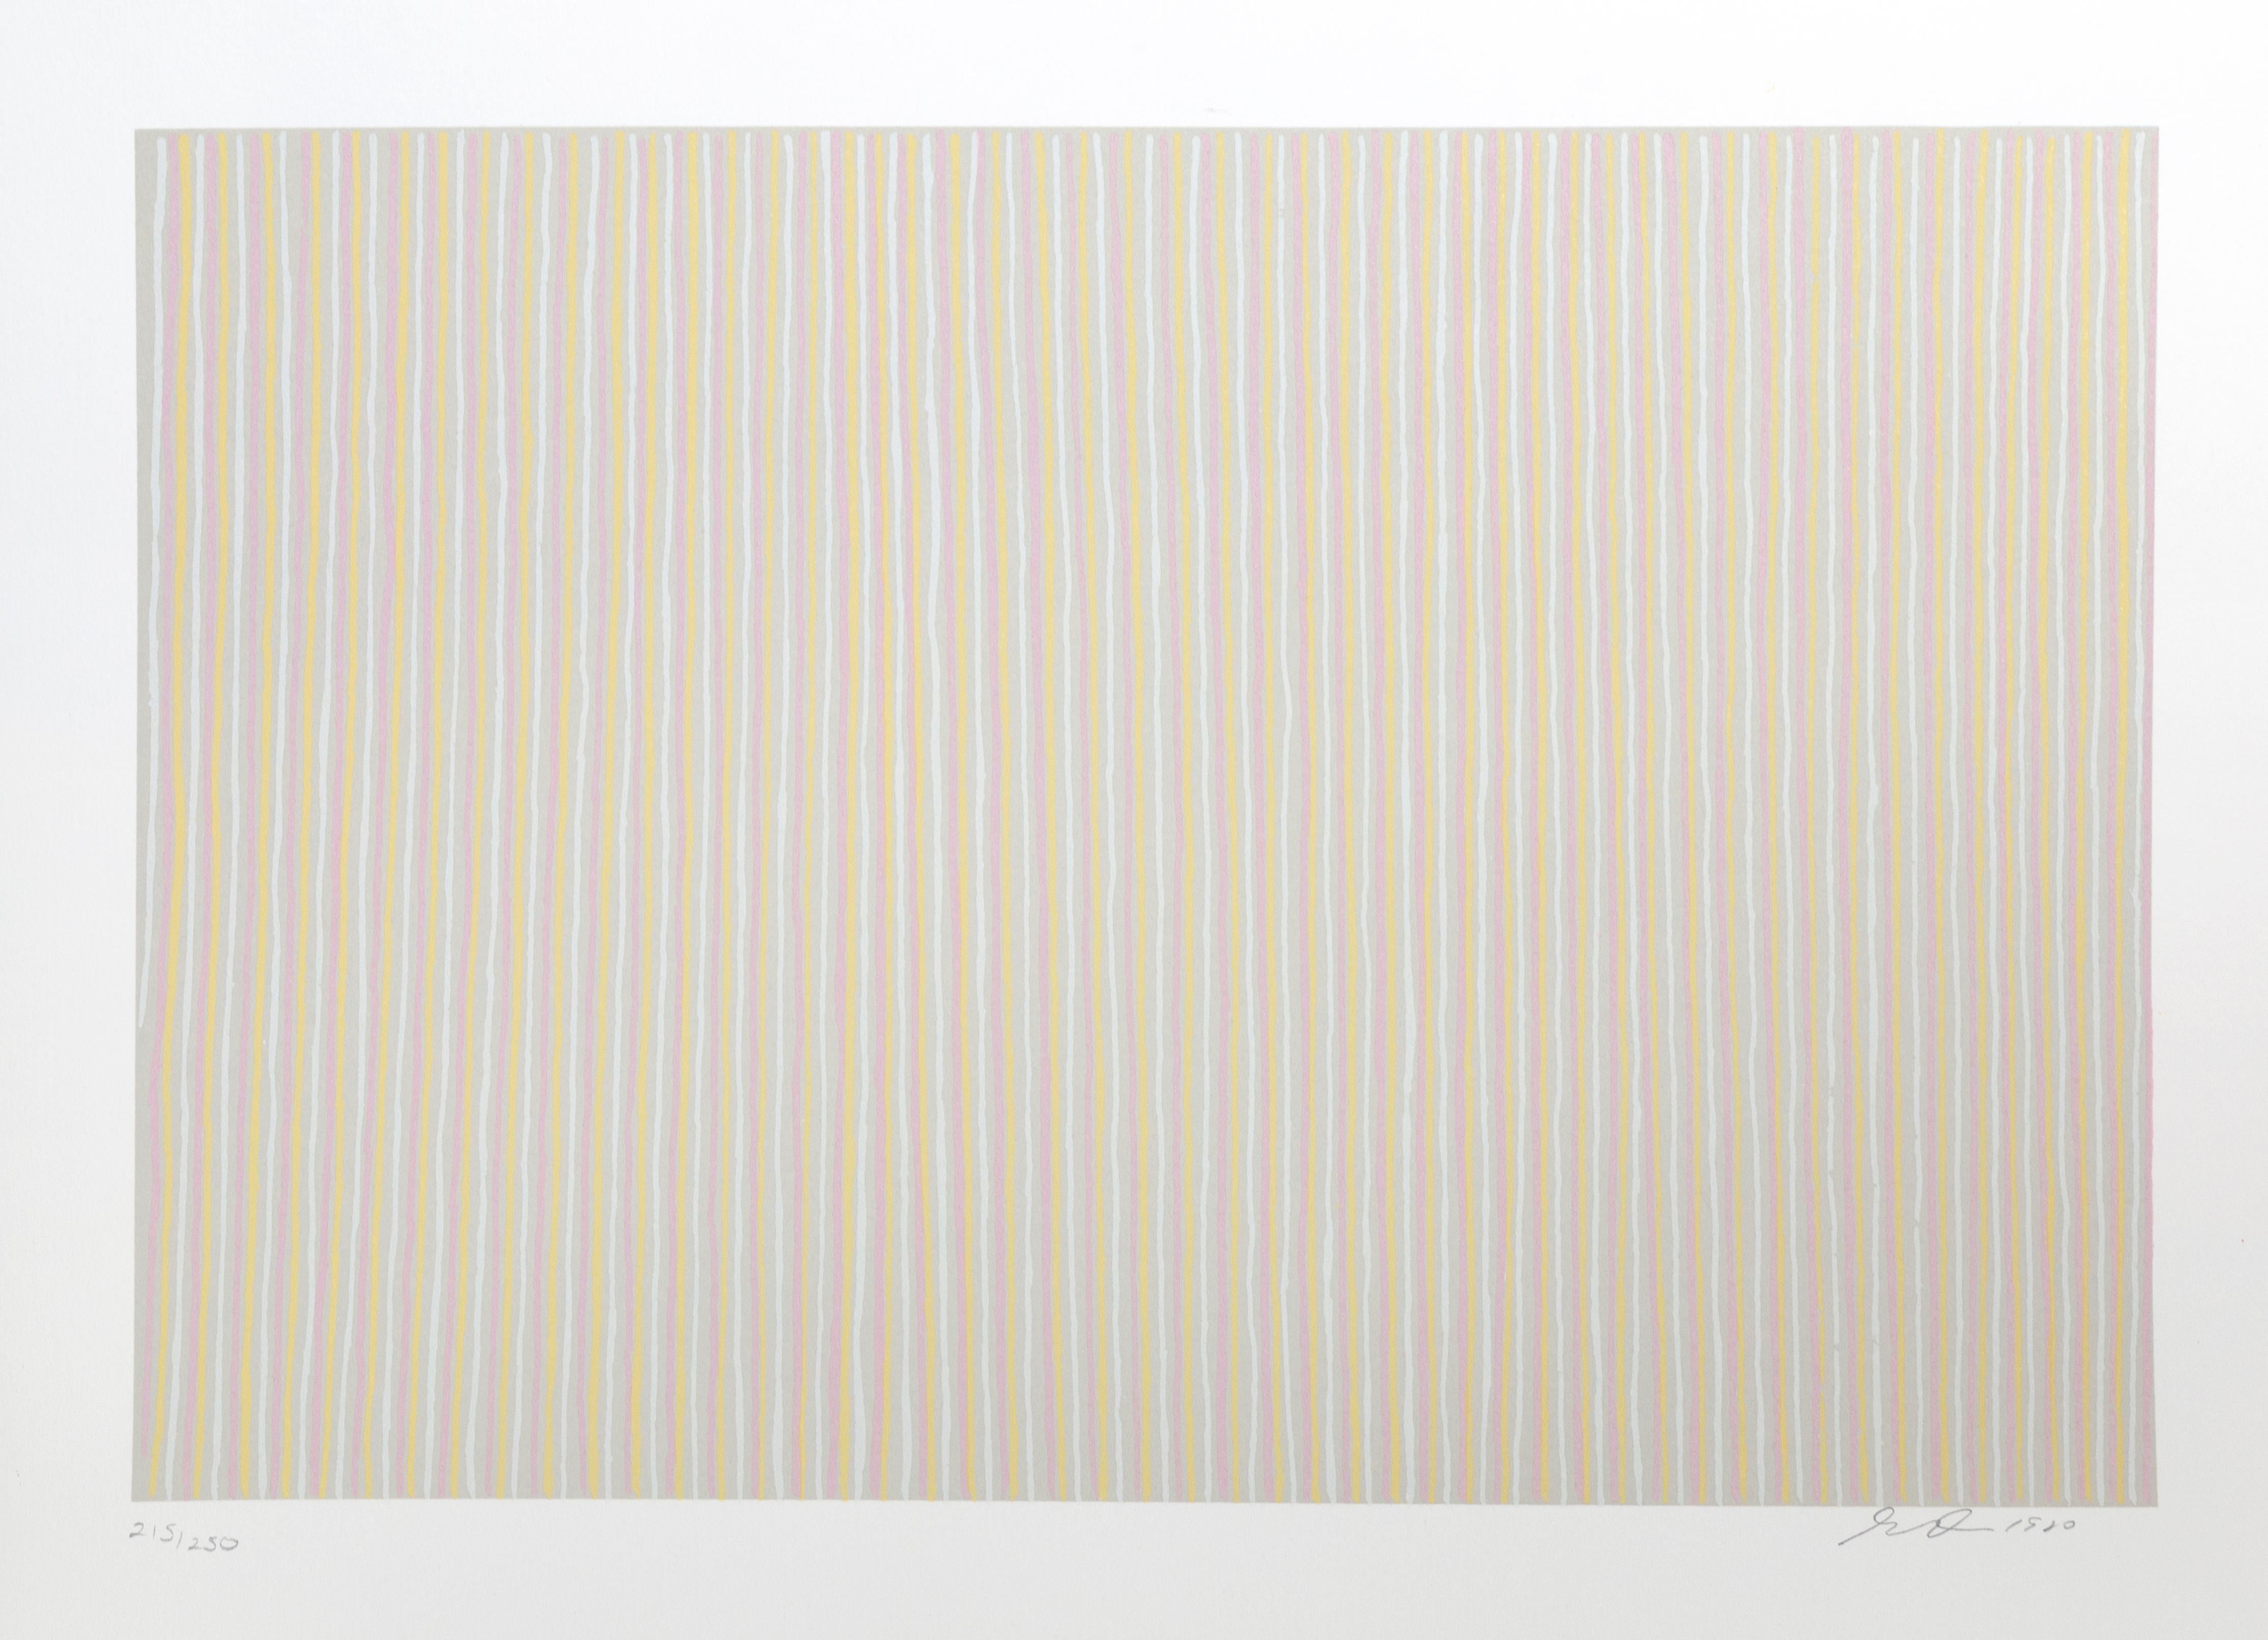 Carousel, lithographie à rayures minimaliste de Gene Davis